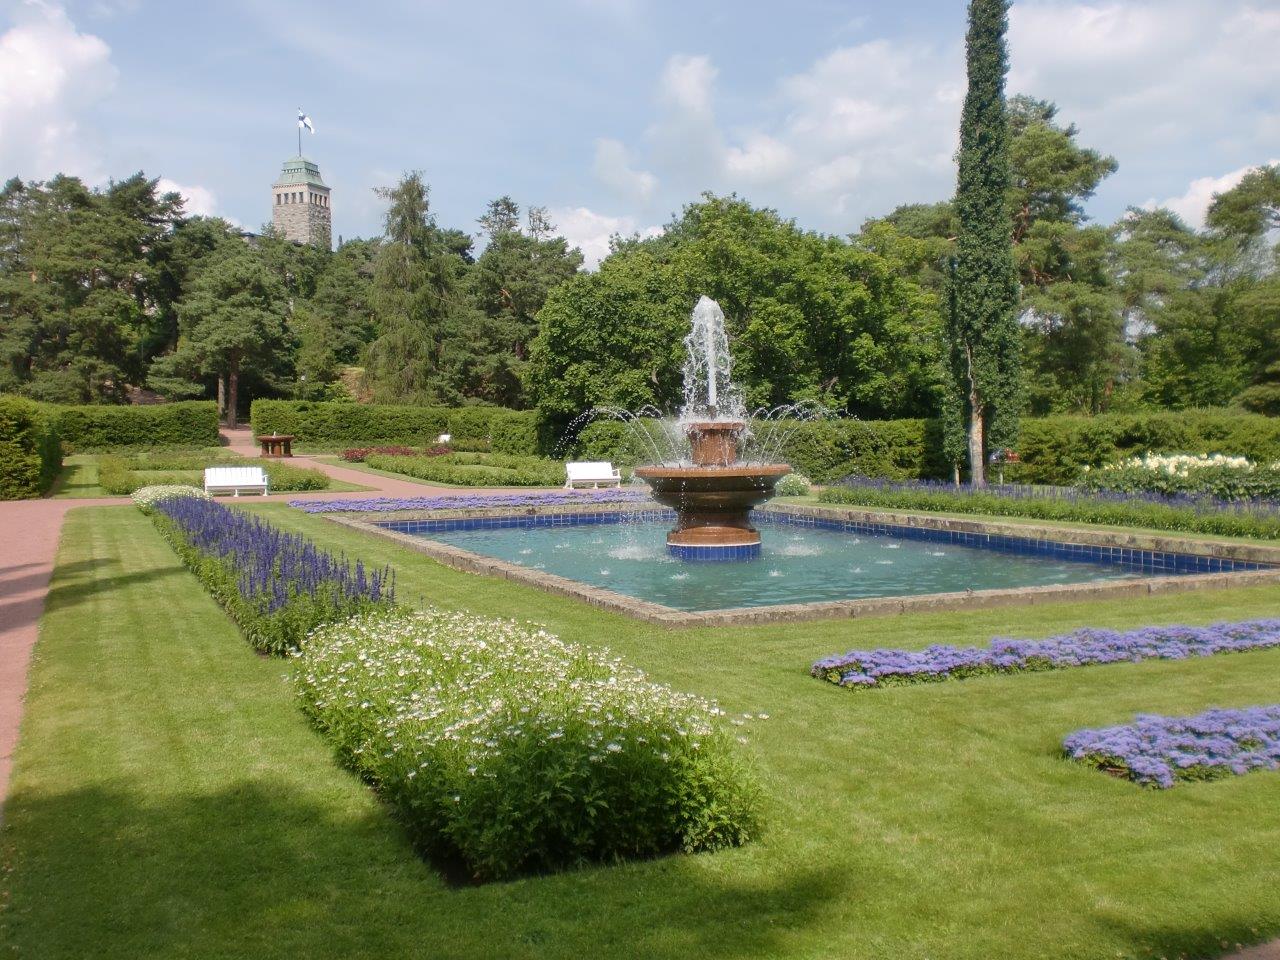 Kultarannan puutarhaa. Wiki Loves Monuments, CC BY-SA 4.0  Mikkoau 2015